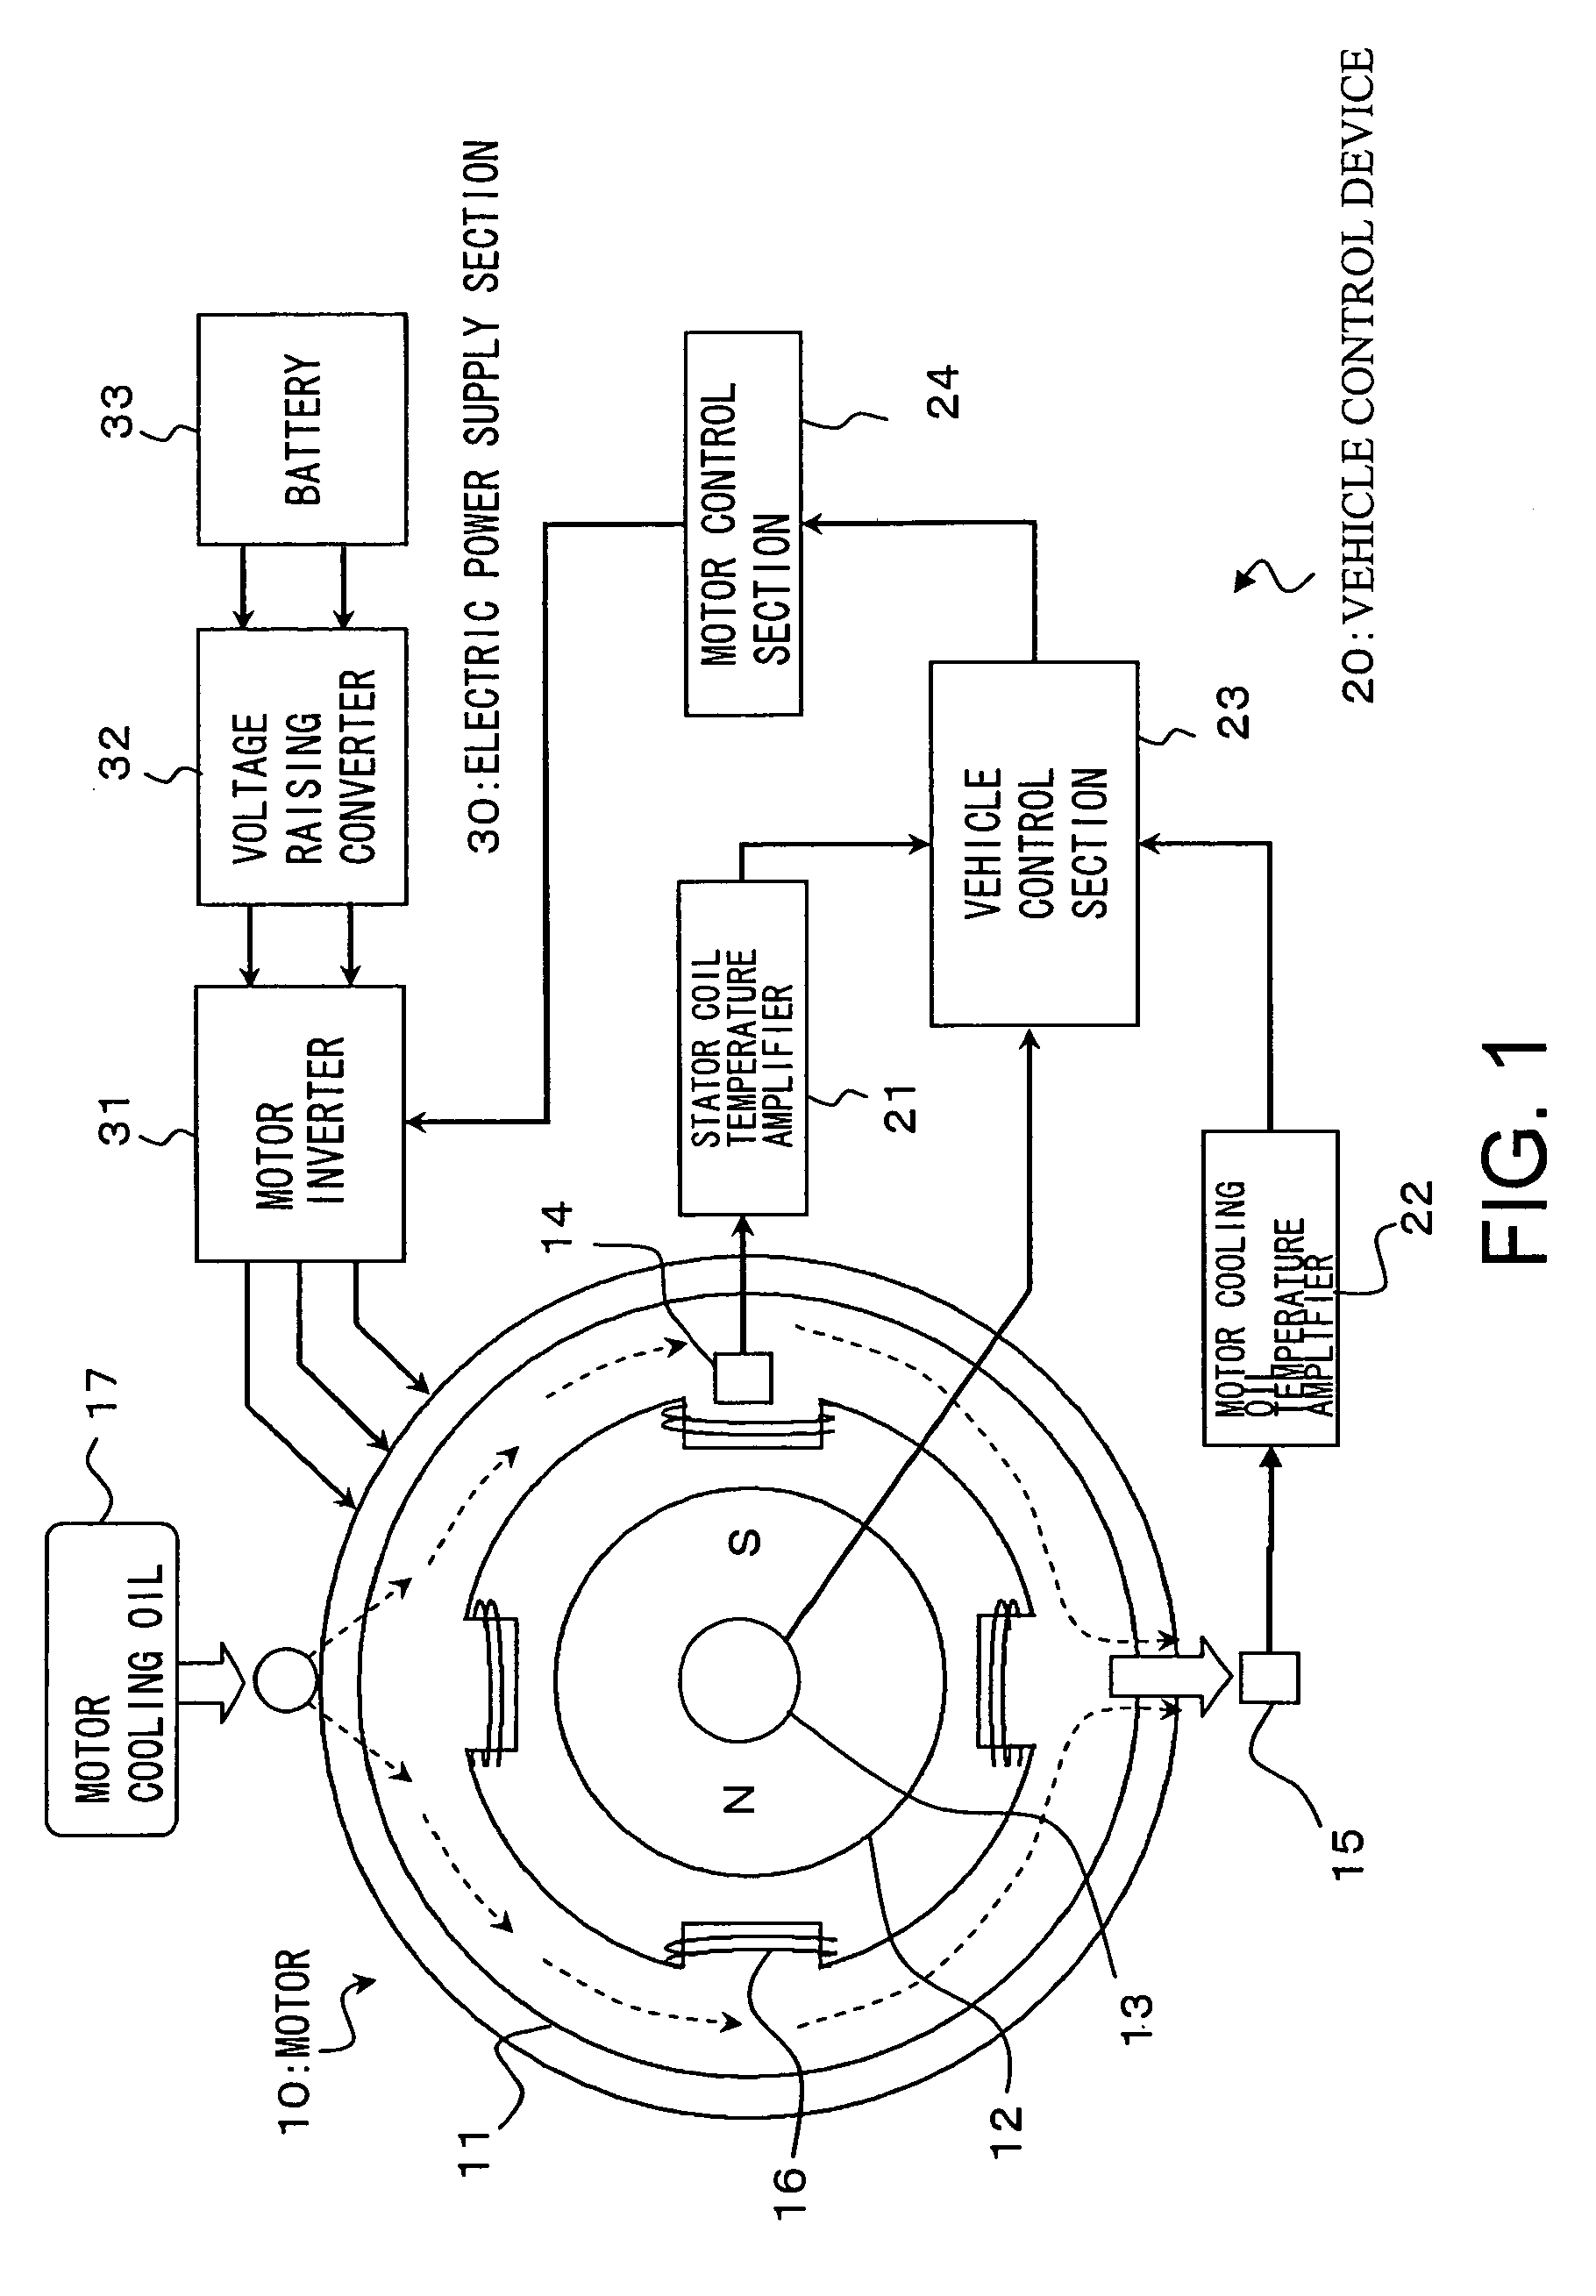 Motor control device, control method, and control program